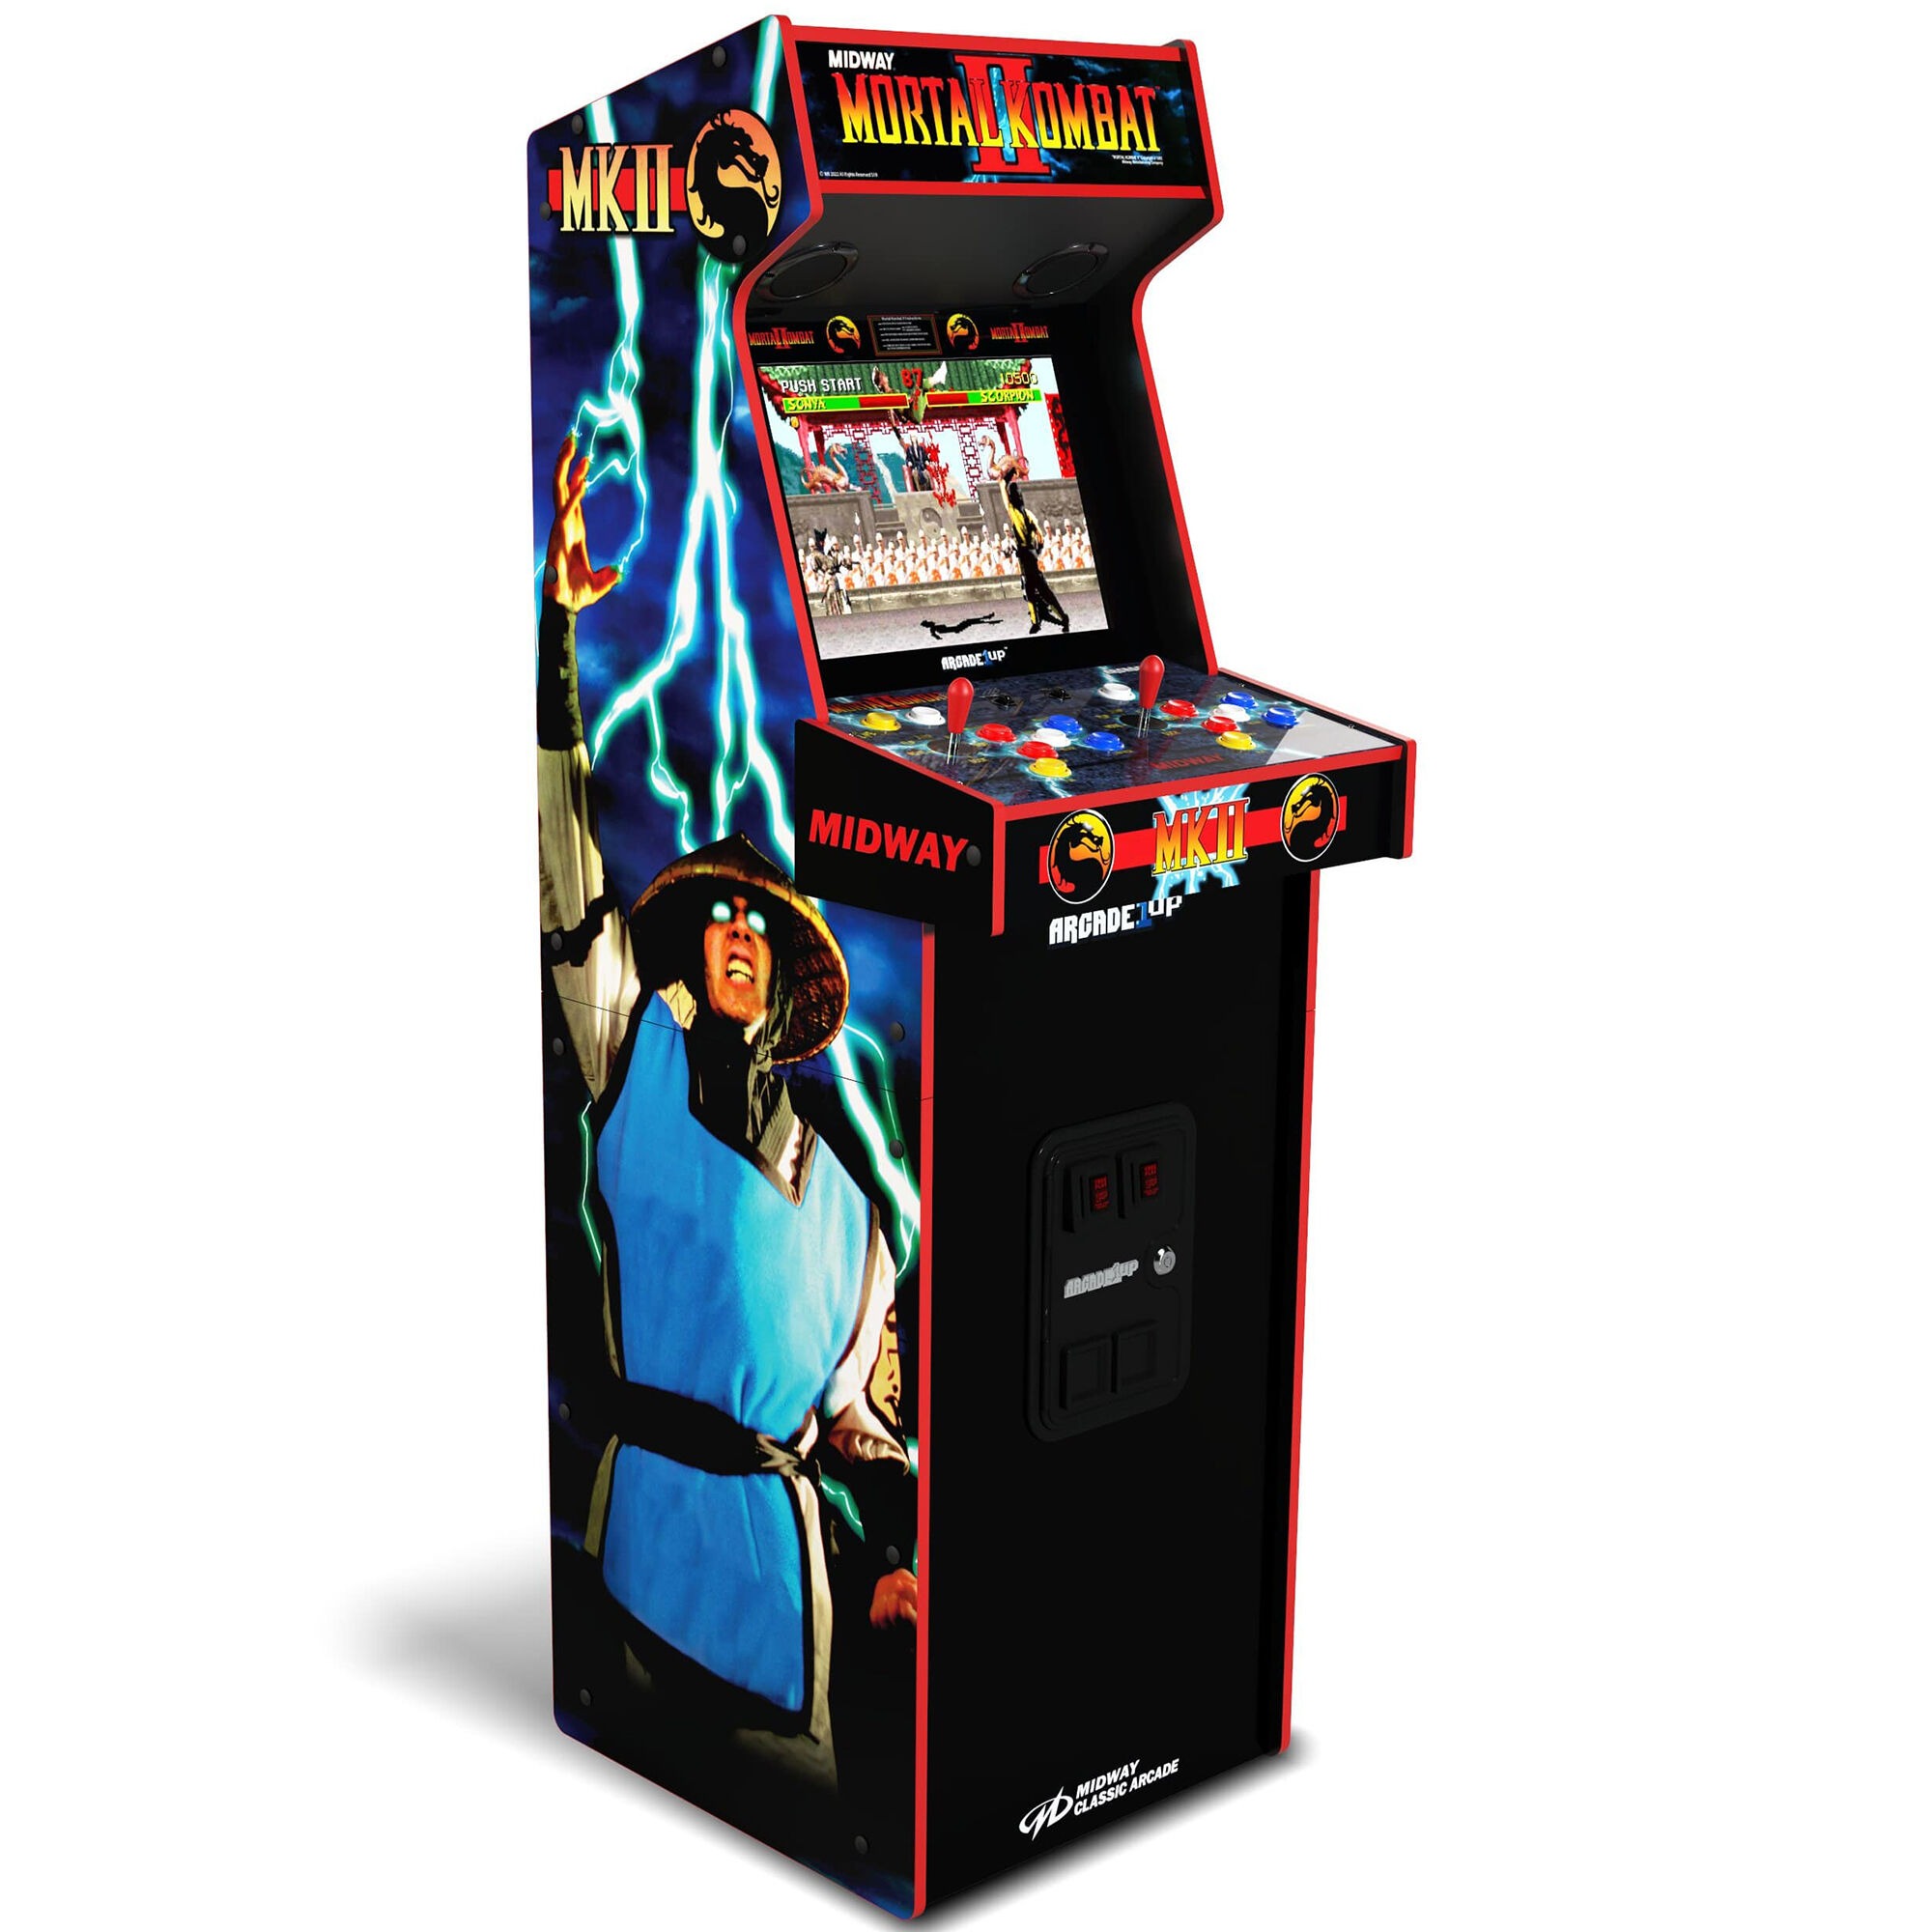 Arcade1up Mortal Kombat II Deluxe Arcade Game | P.C. Richard & Son